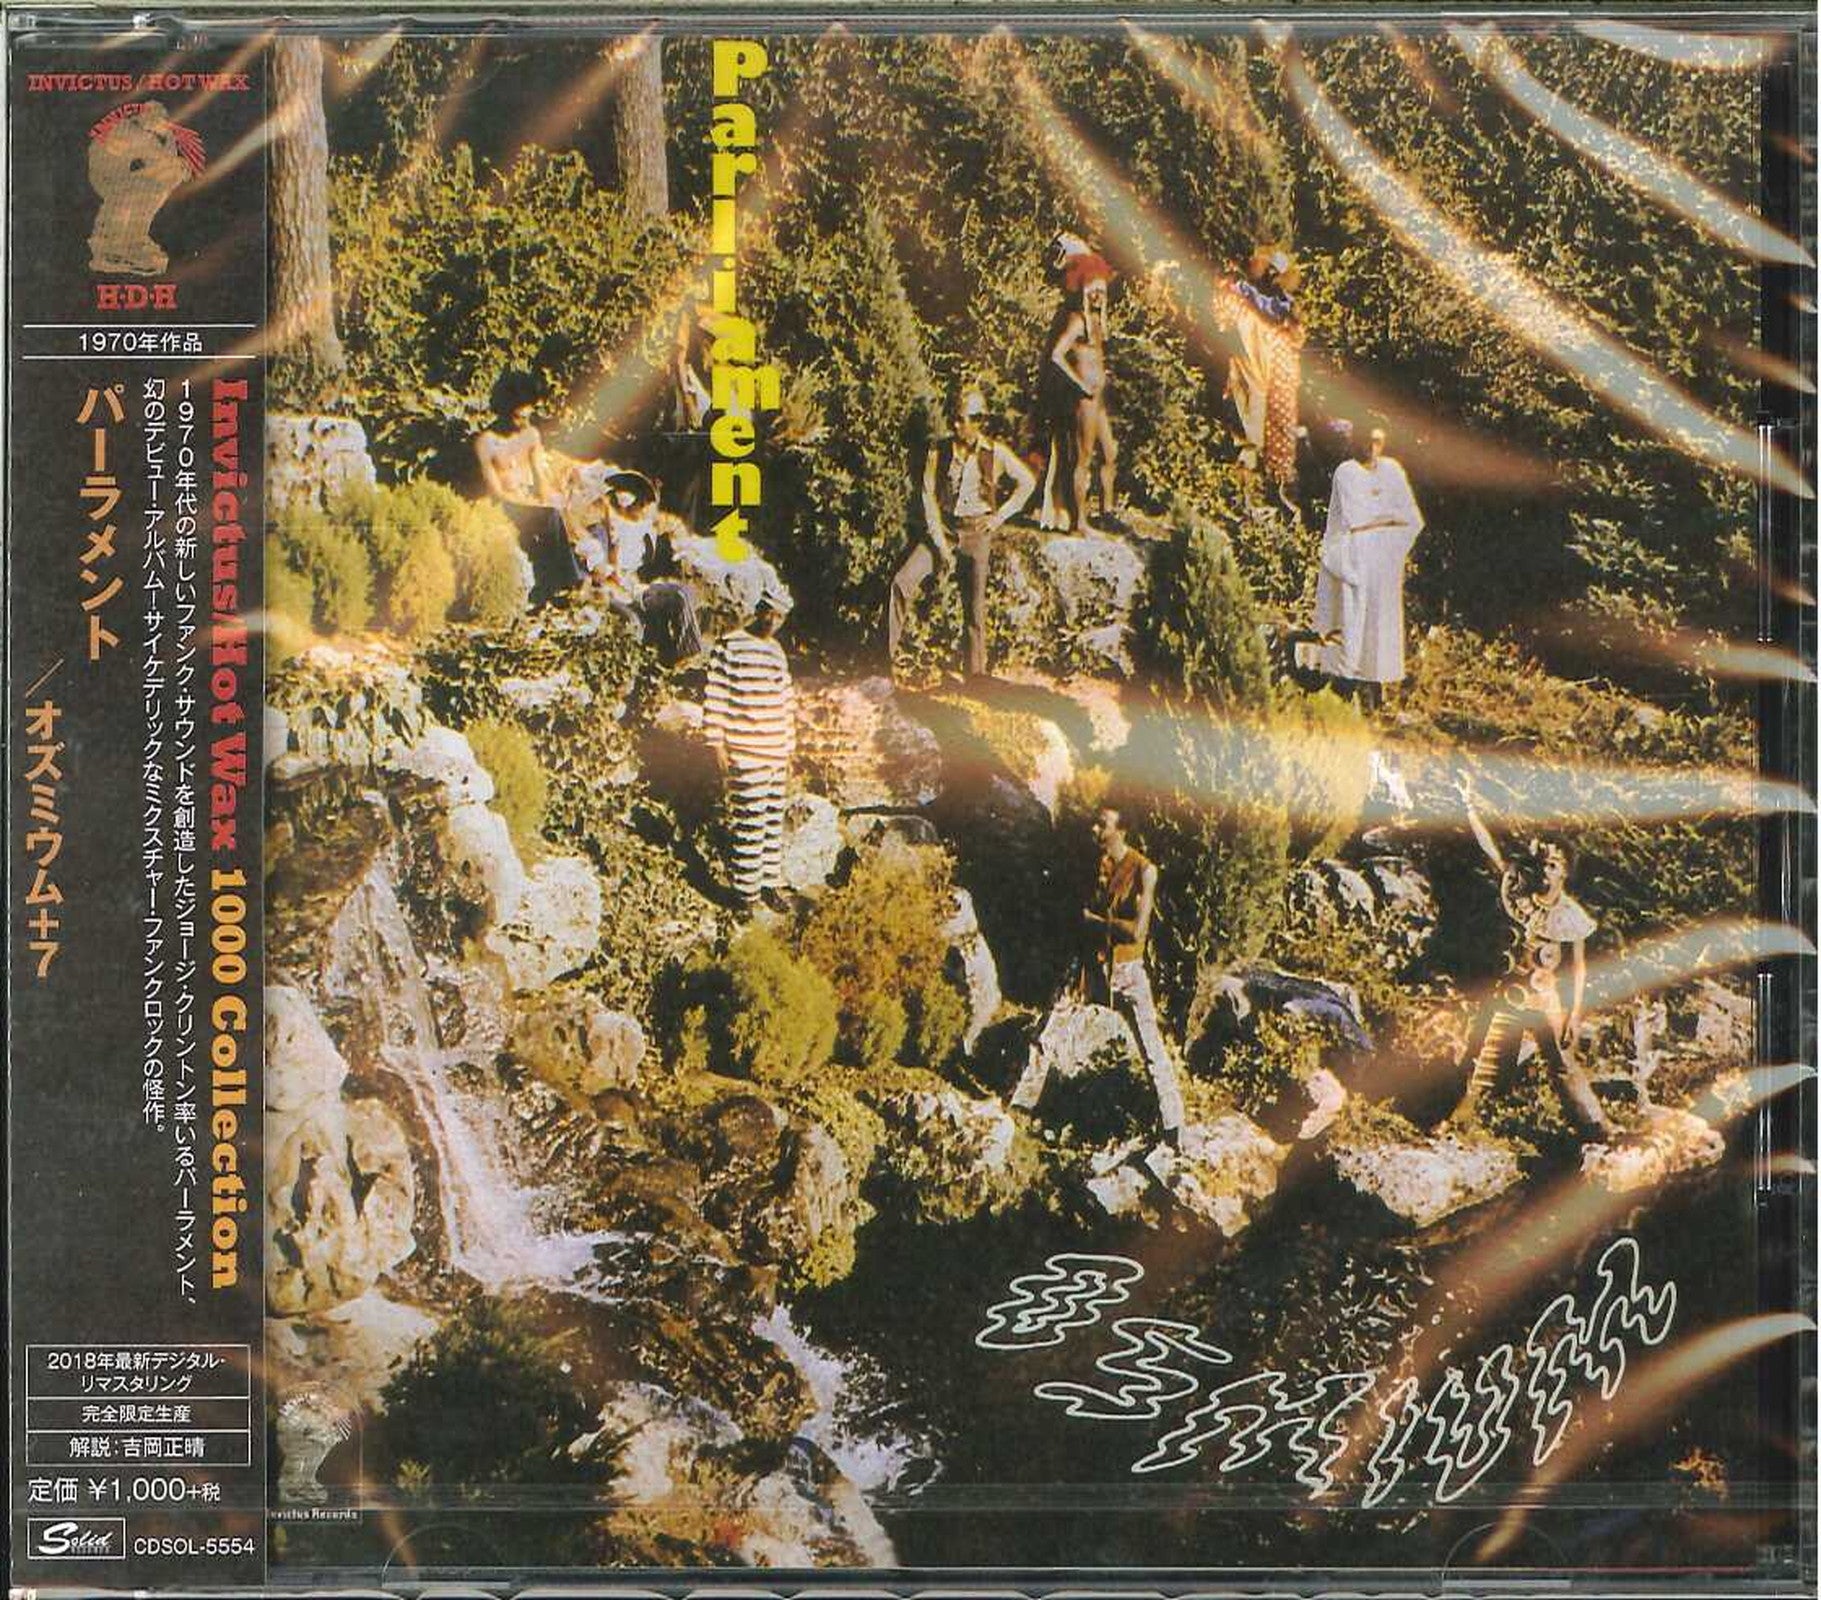 Parliament - Osmium - Japan CD Limited Edition – CDs Vinyl Japan Store